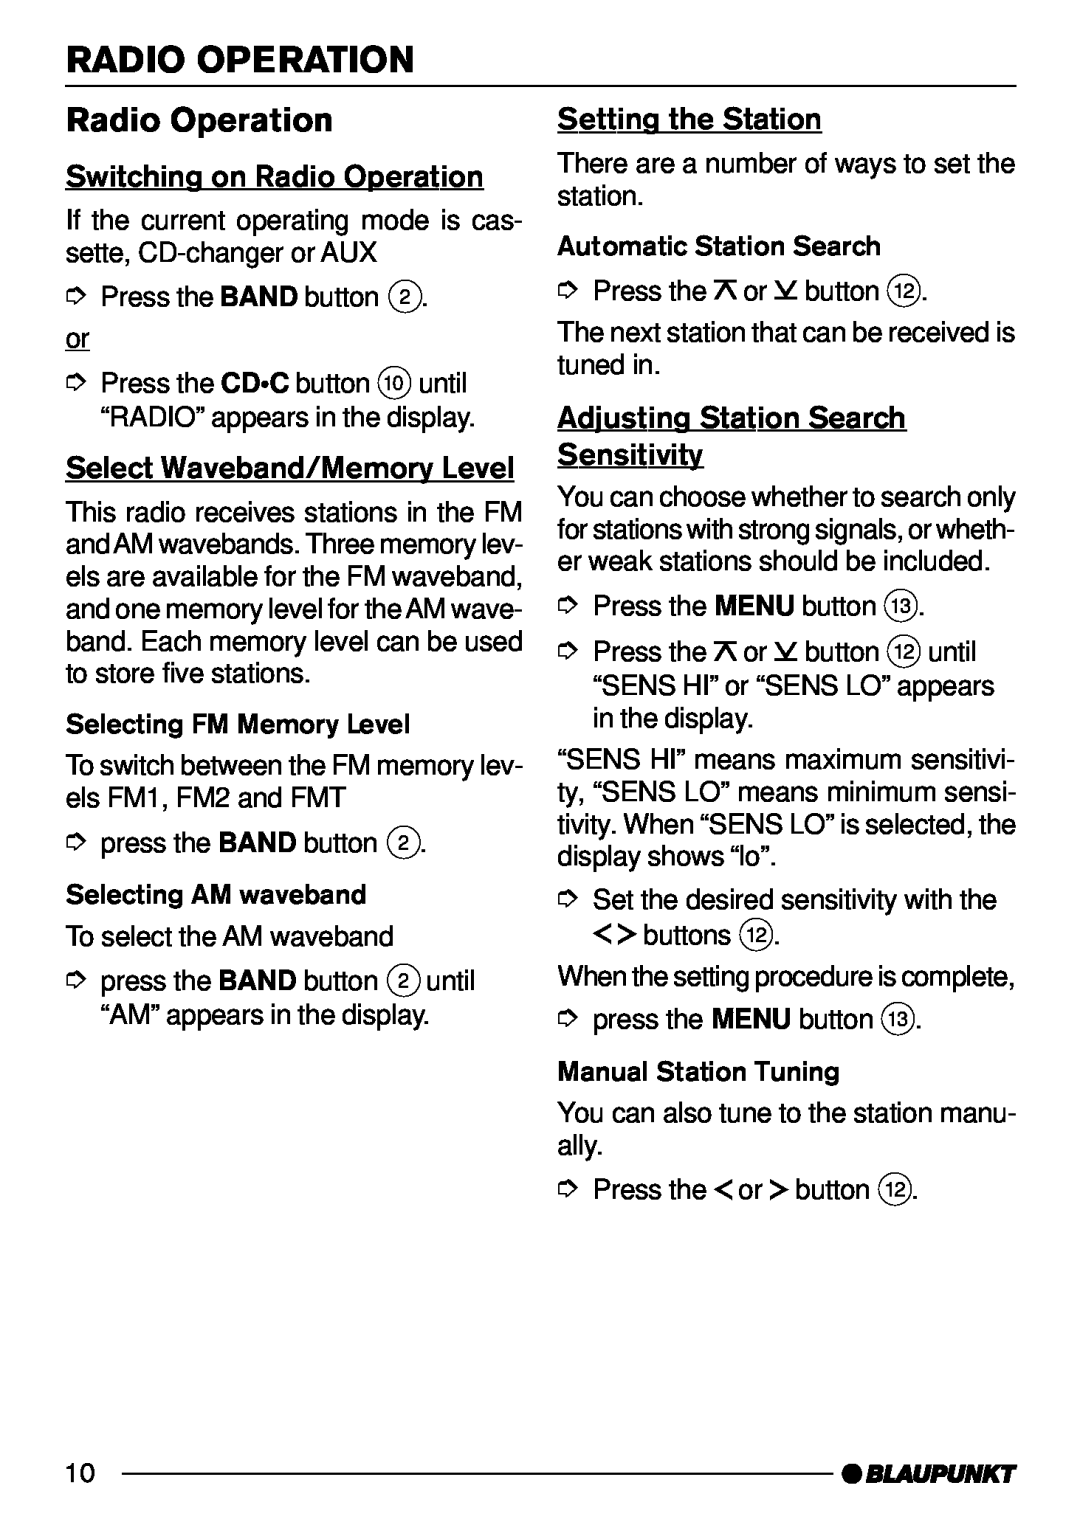 Blaupunkt C31 manual Switching on Radio Operation, Select Waveband/Memory Level, Setting the Station 